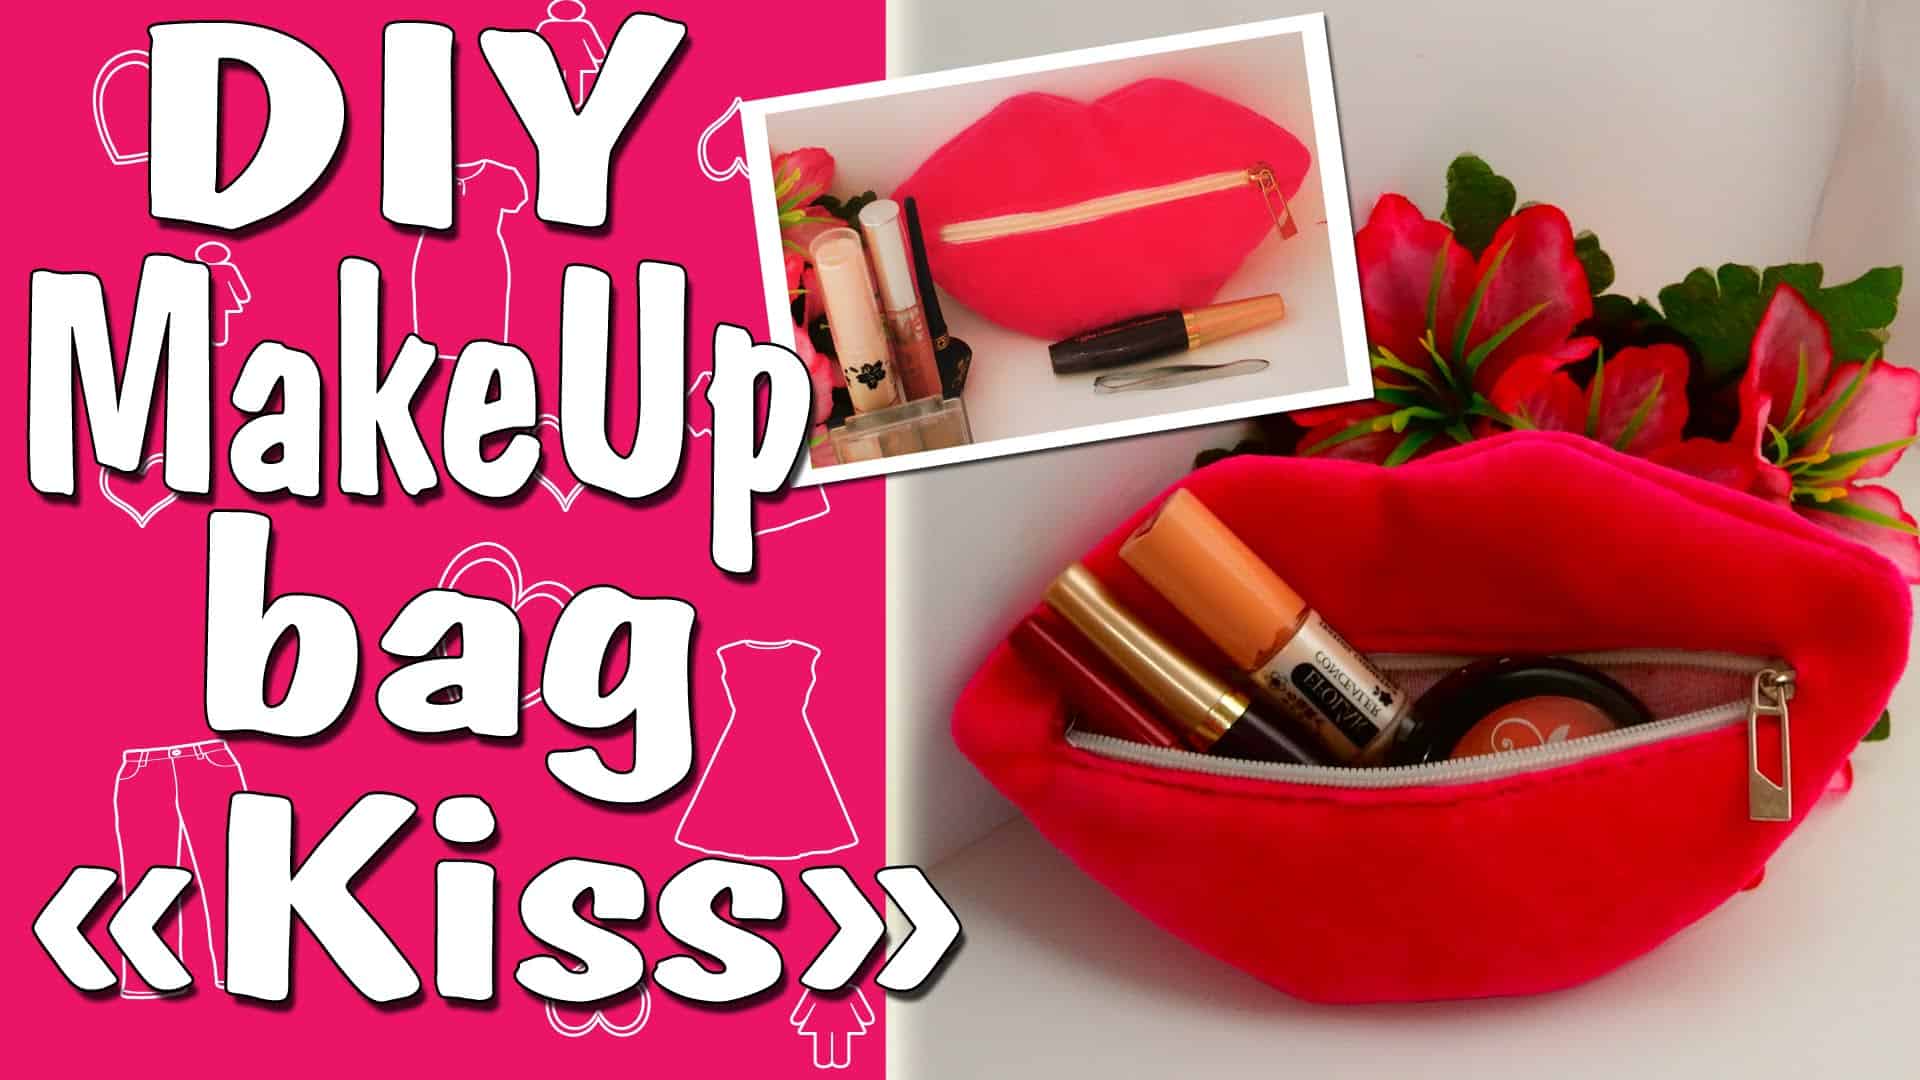 Kiss shaped makeup bag